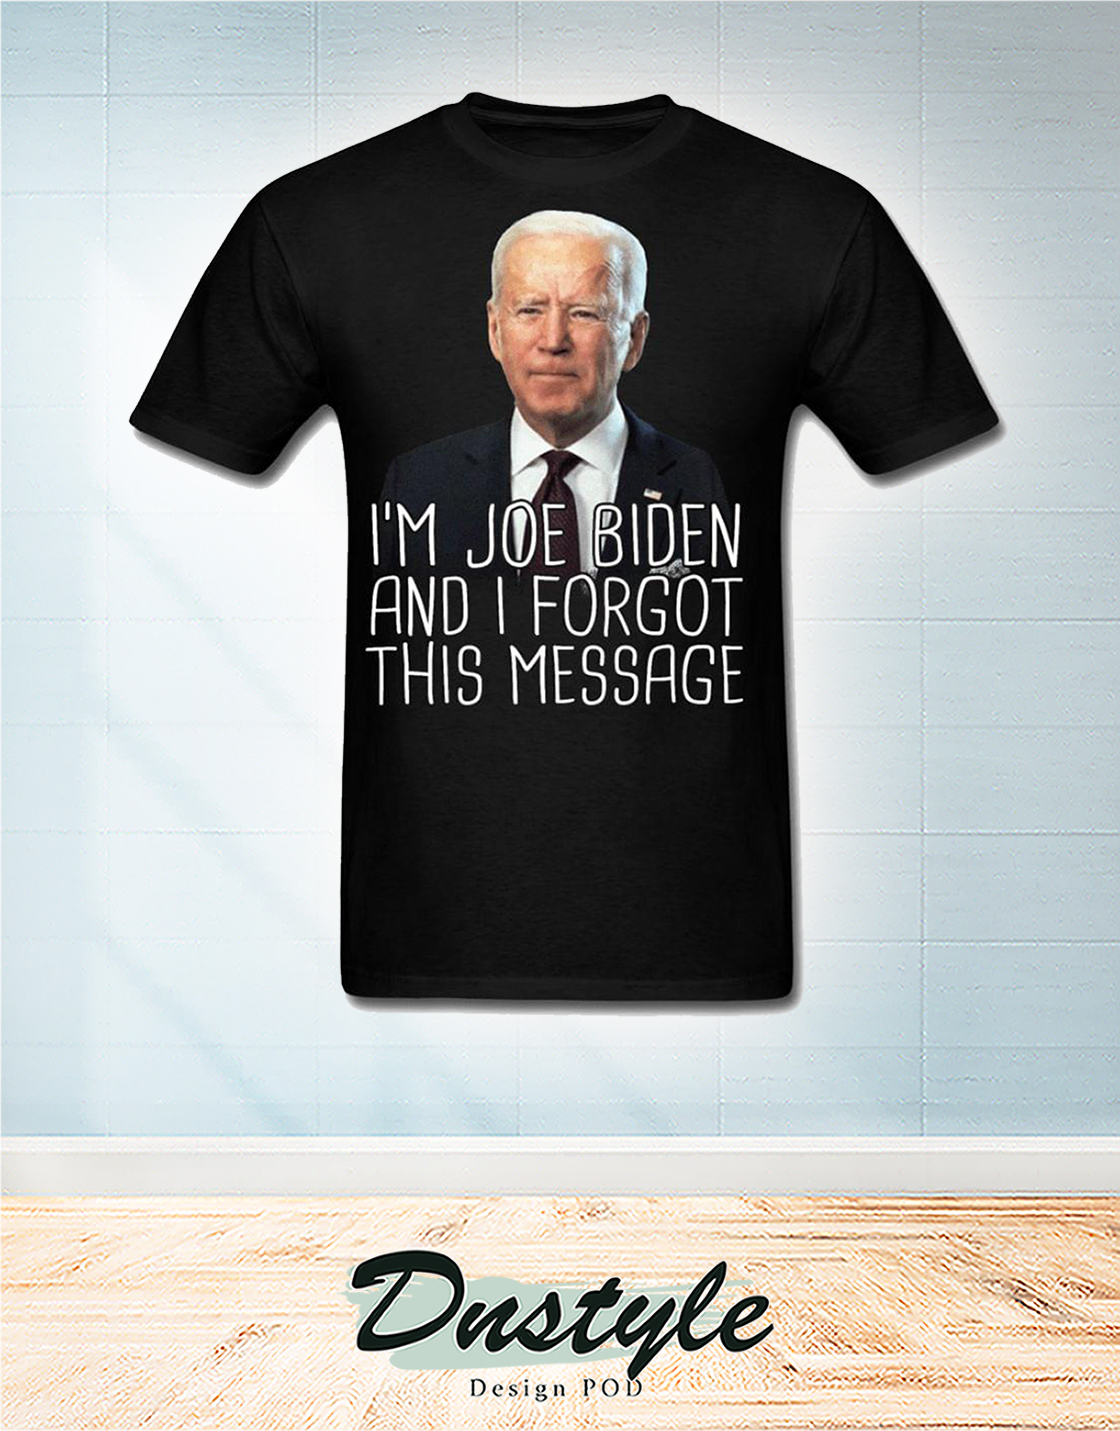 I'm Joe Biden and I forgot this message t-shirt 2